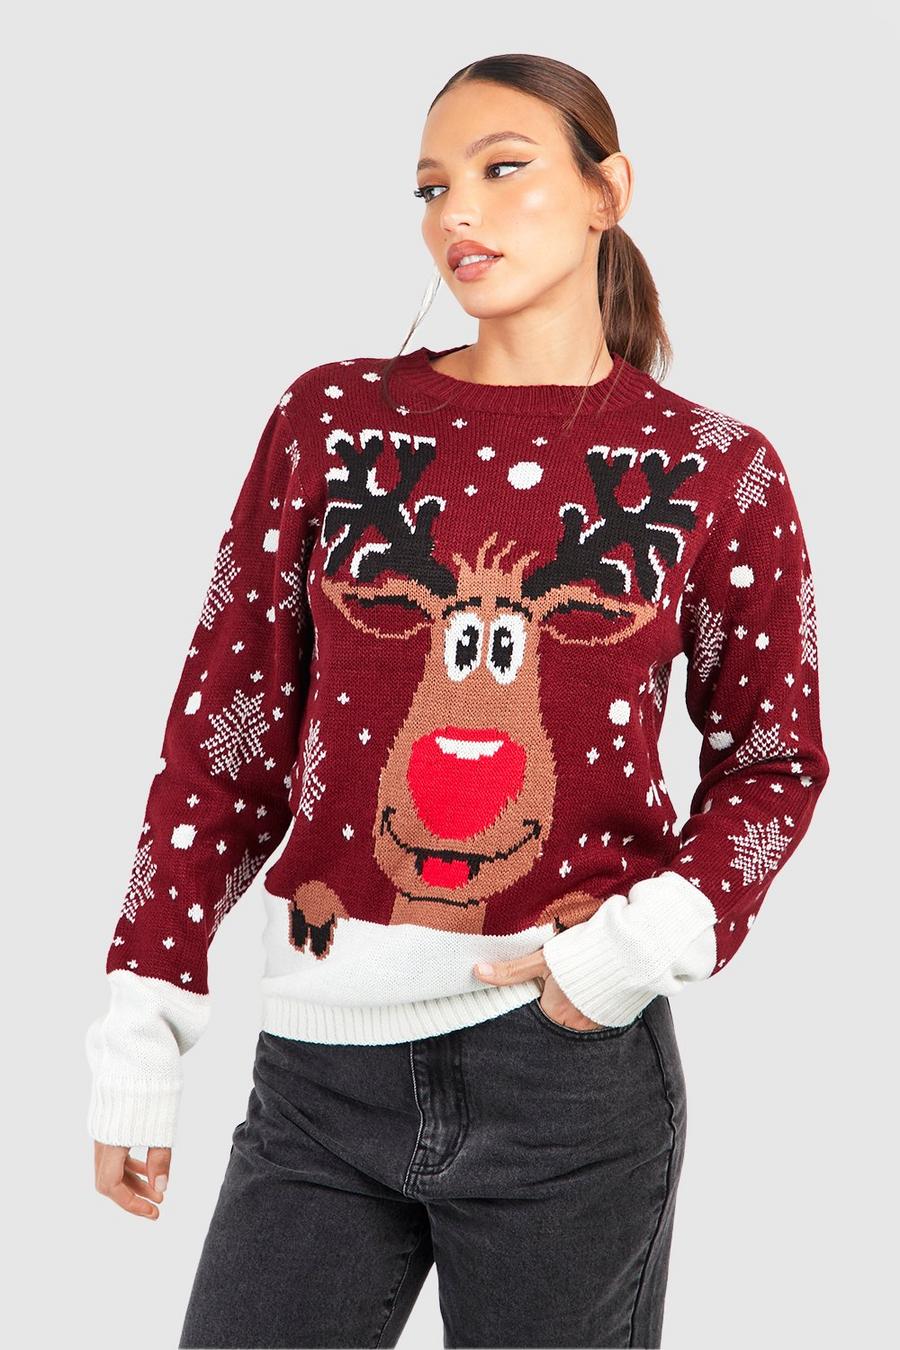 Tall Rentier Weihnachts-Pullover, Weinrot red